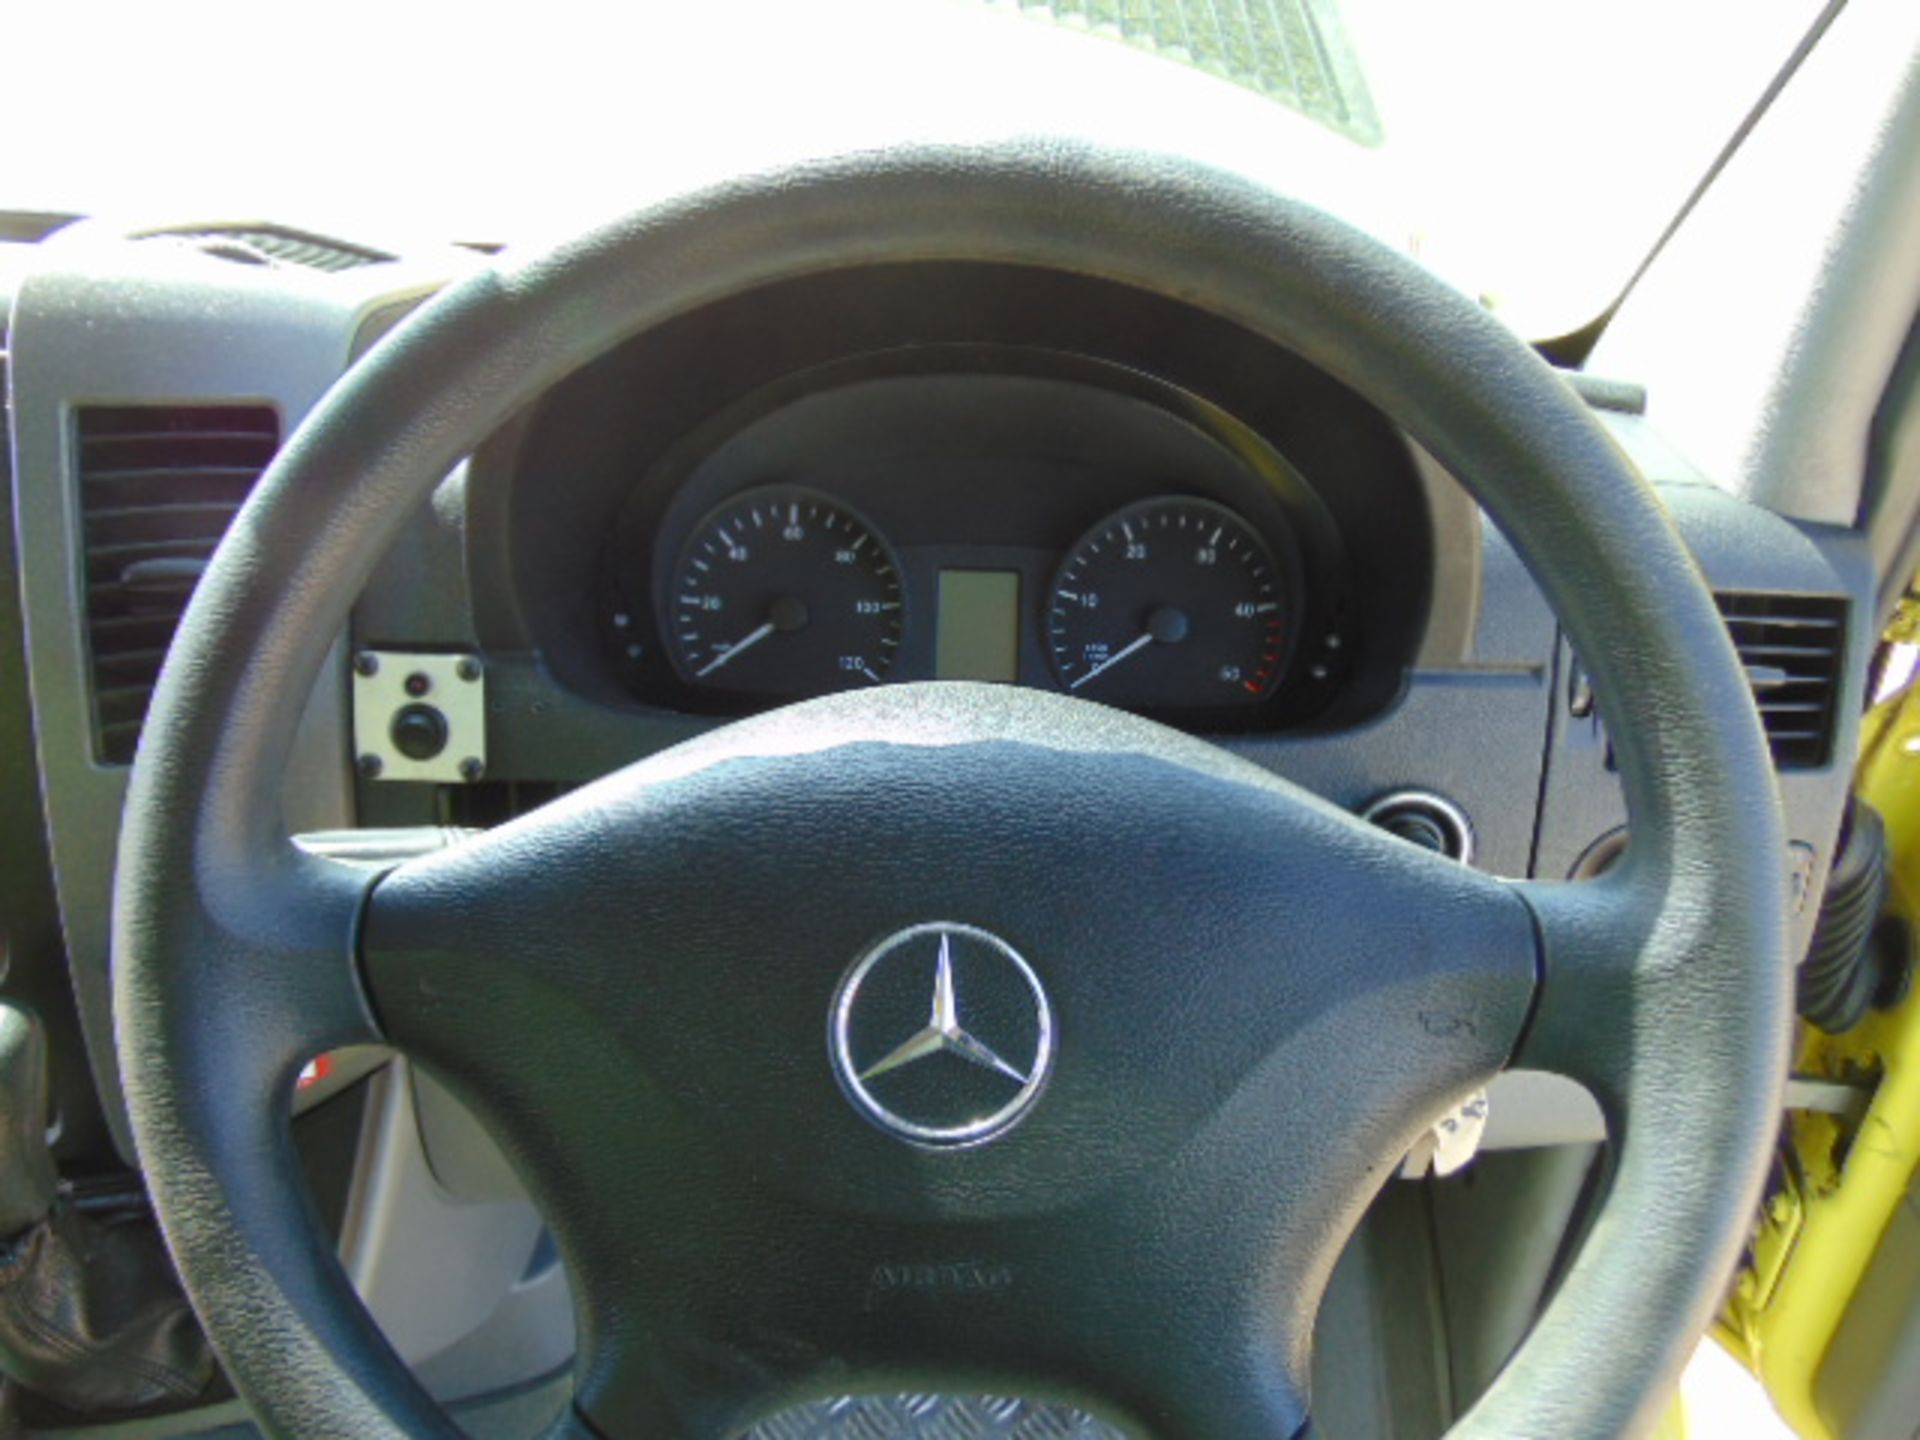 Mercedes Sprinter 515 CDI Turbo diesel ambulance - Image 11 of 16